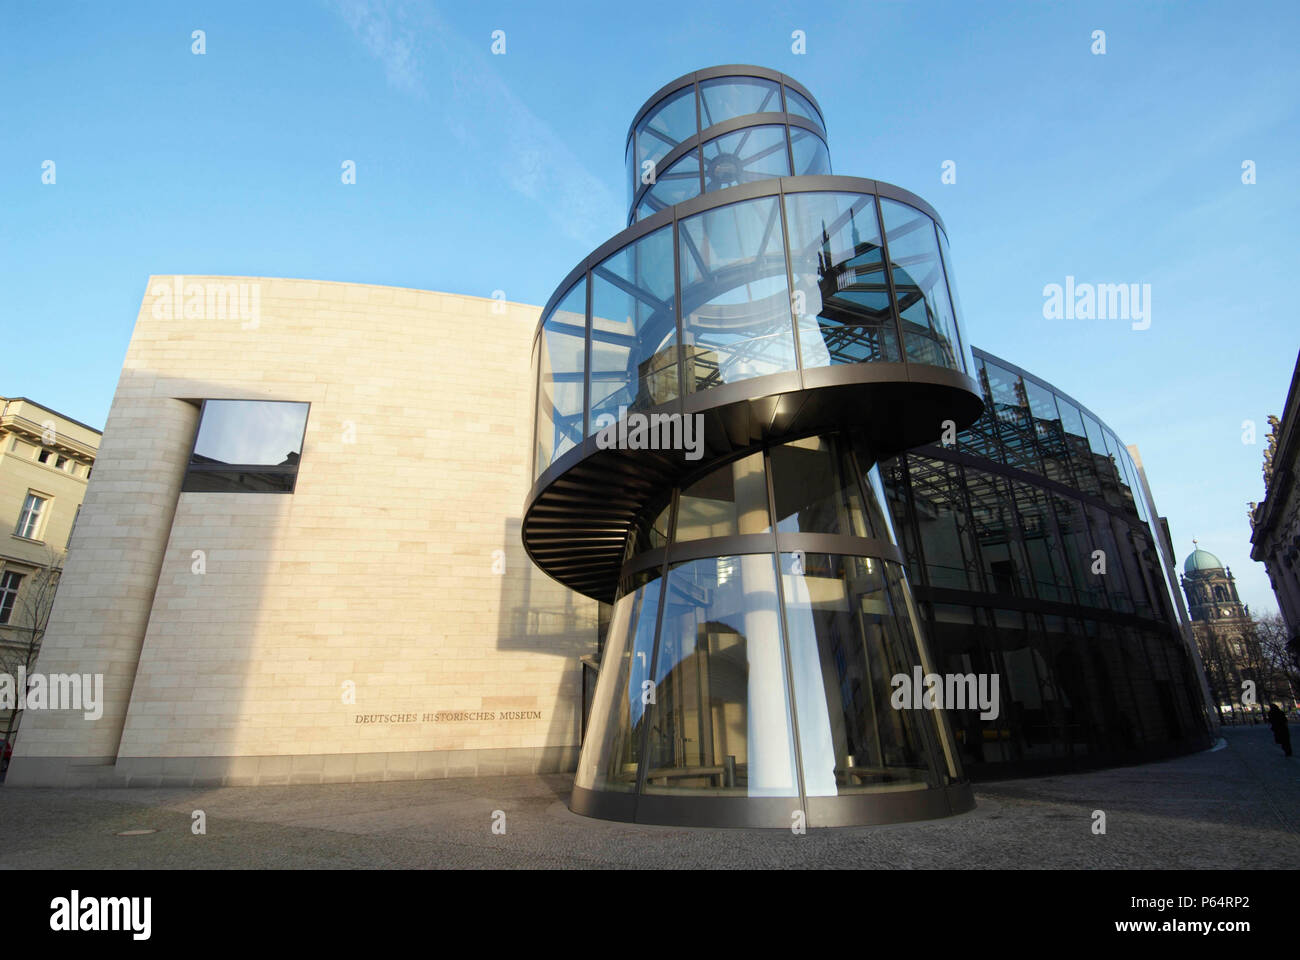 Escalera de vidrio nuevo anexo del museo histórico de Berlín, Alemania desgned por IM Pei. Foto de stock